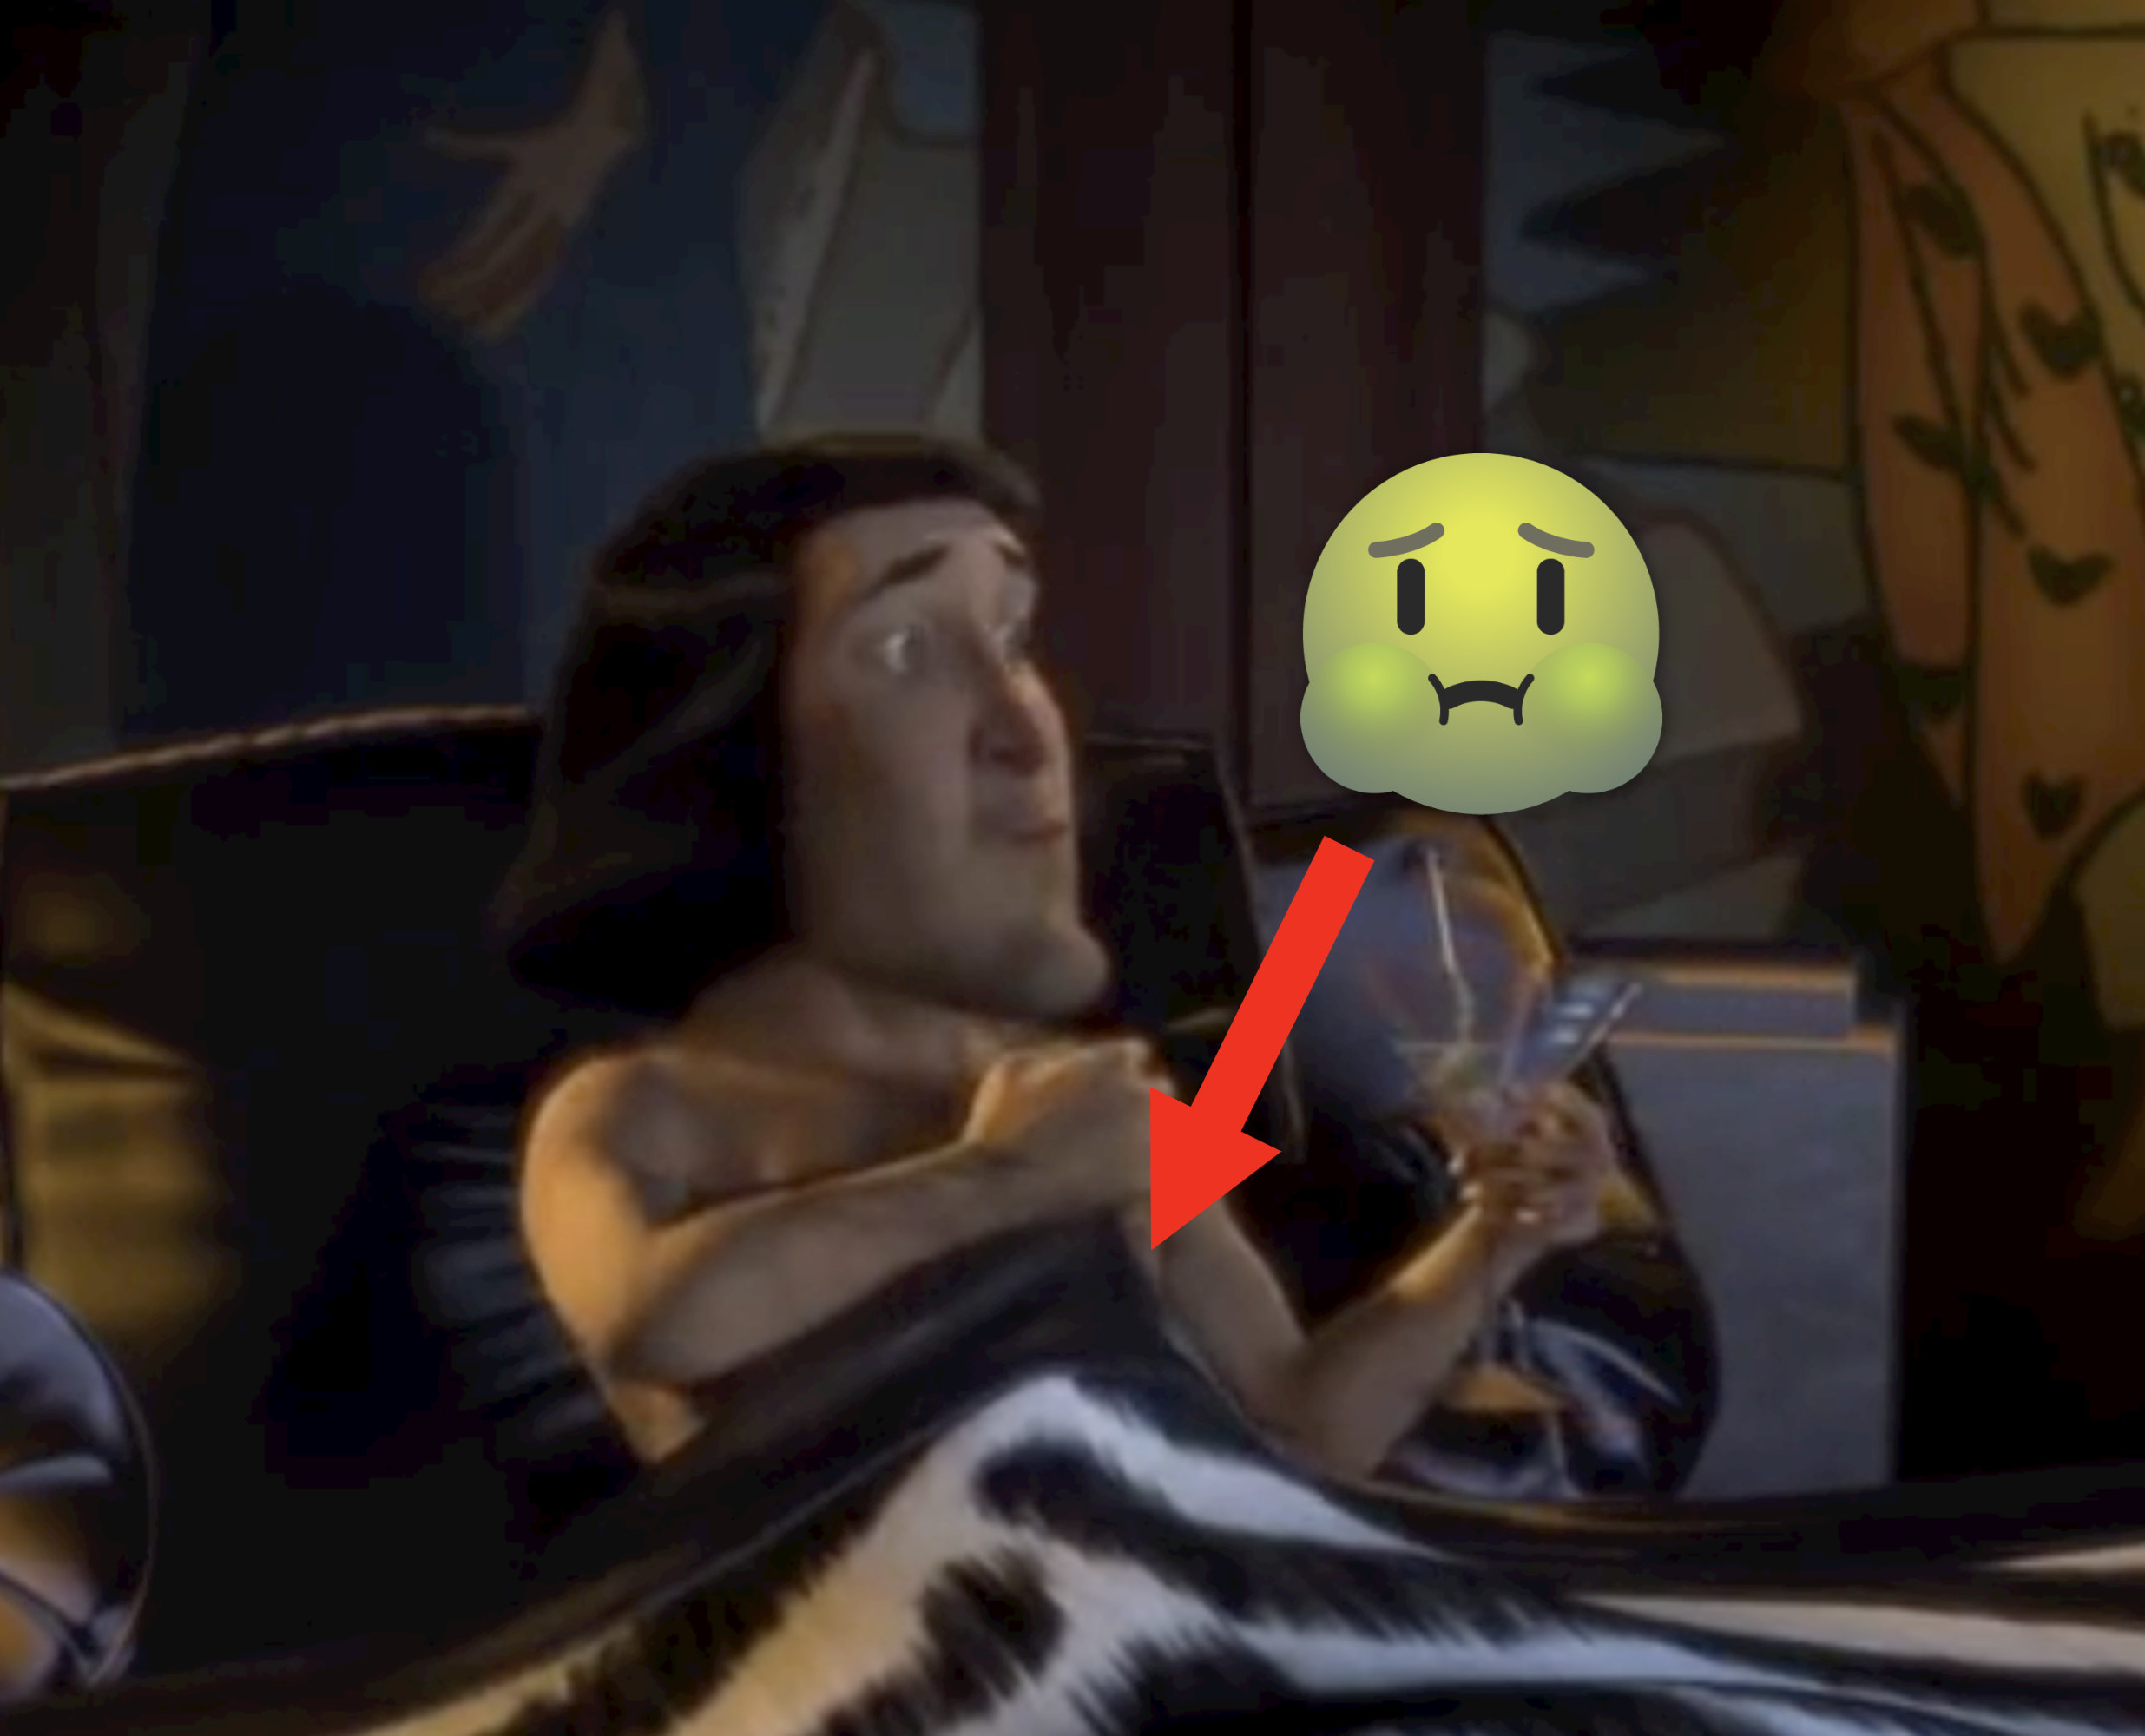 Lord Farquaad hiding his boner